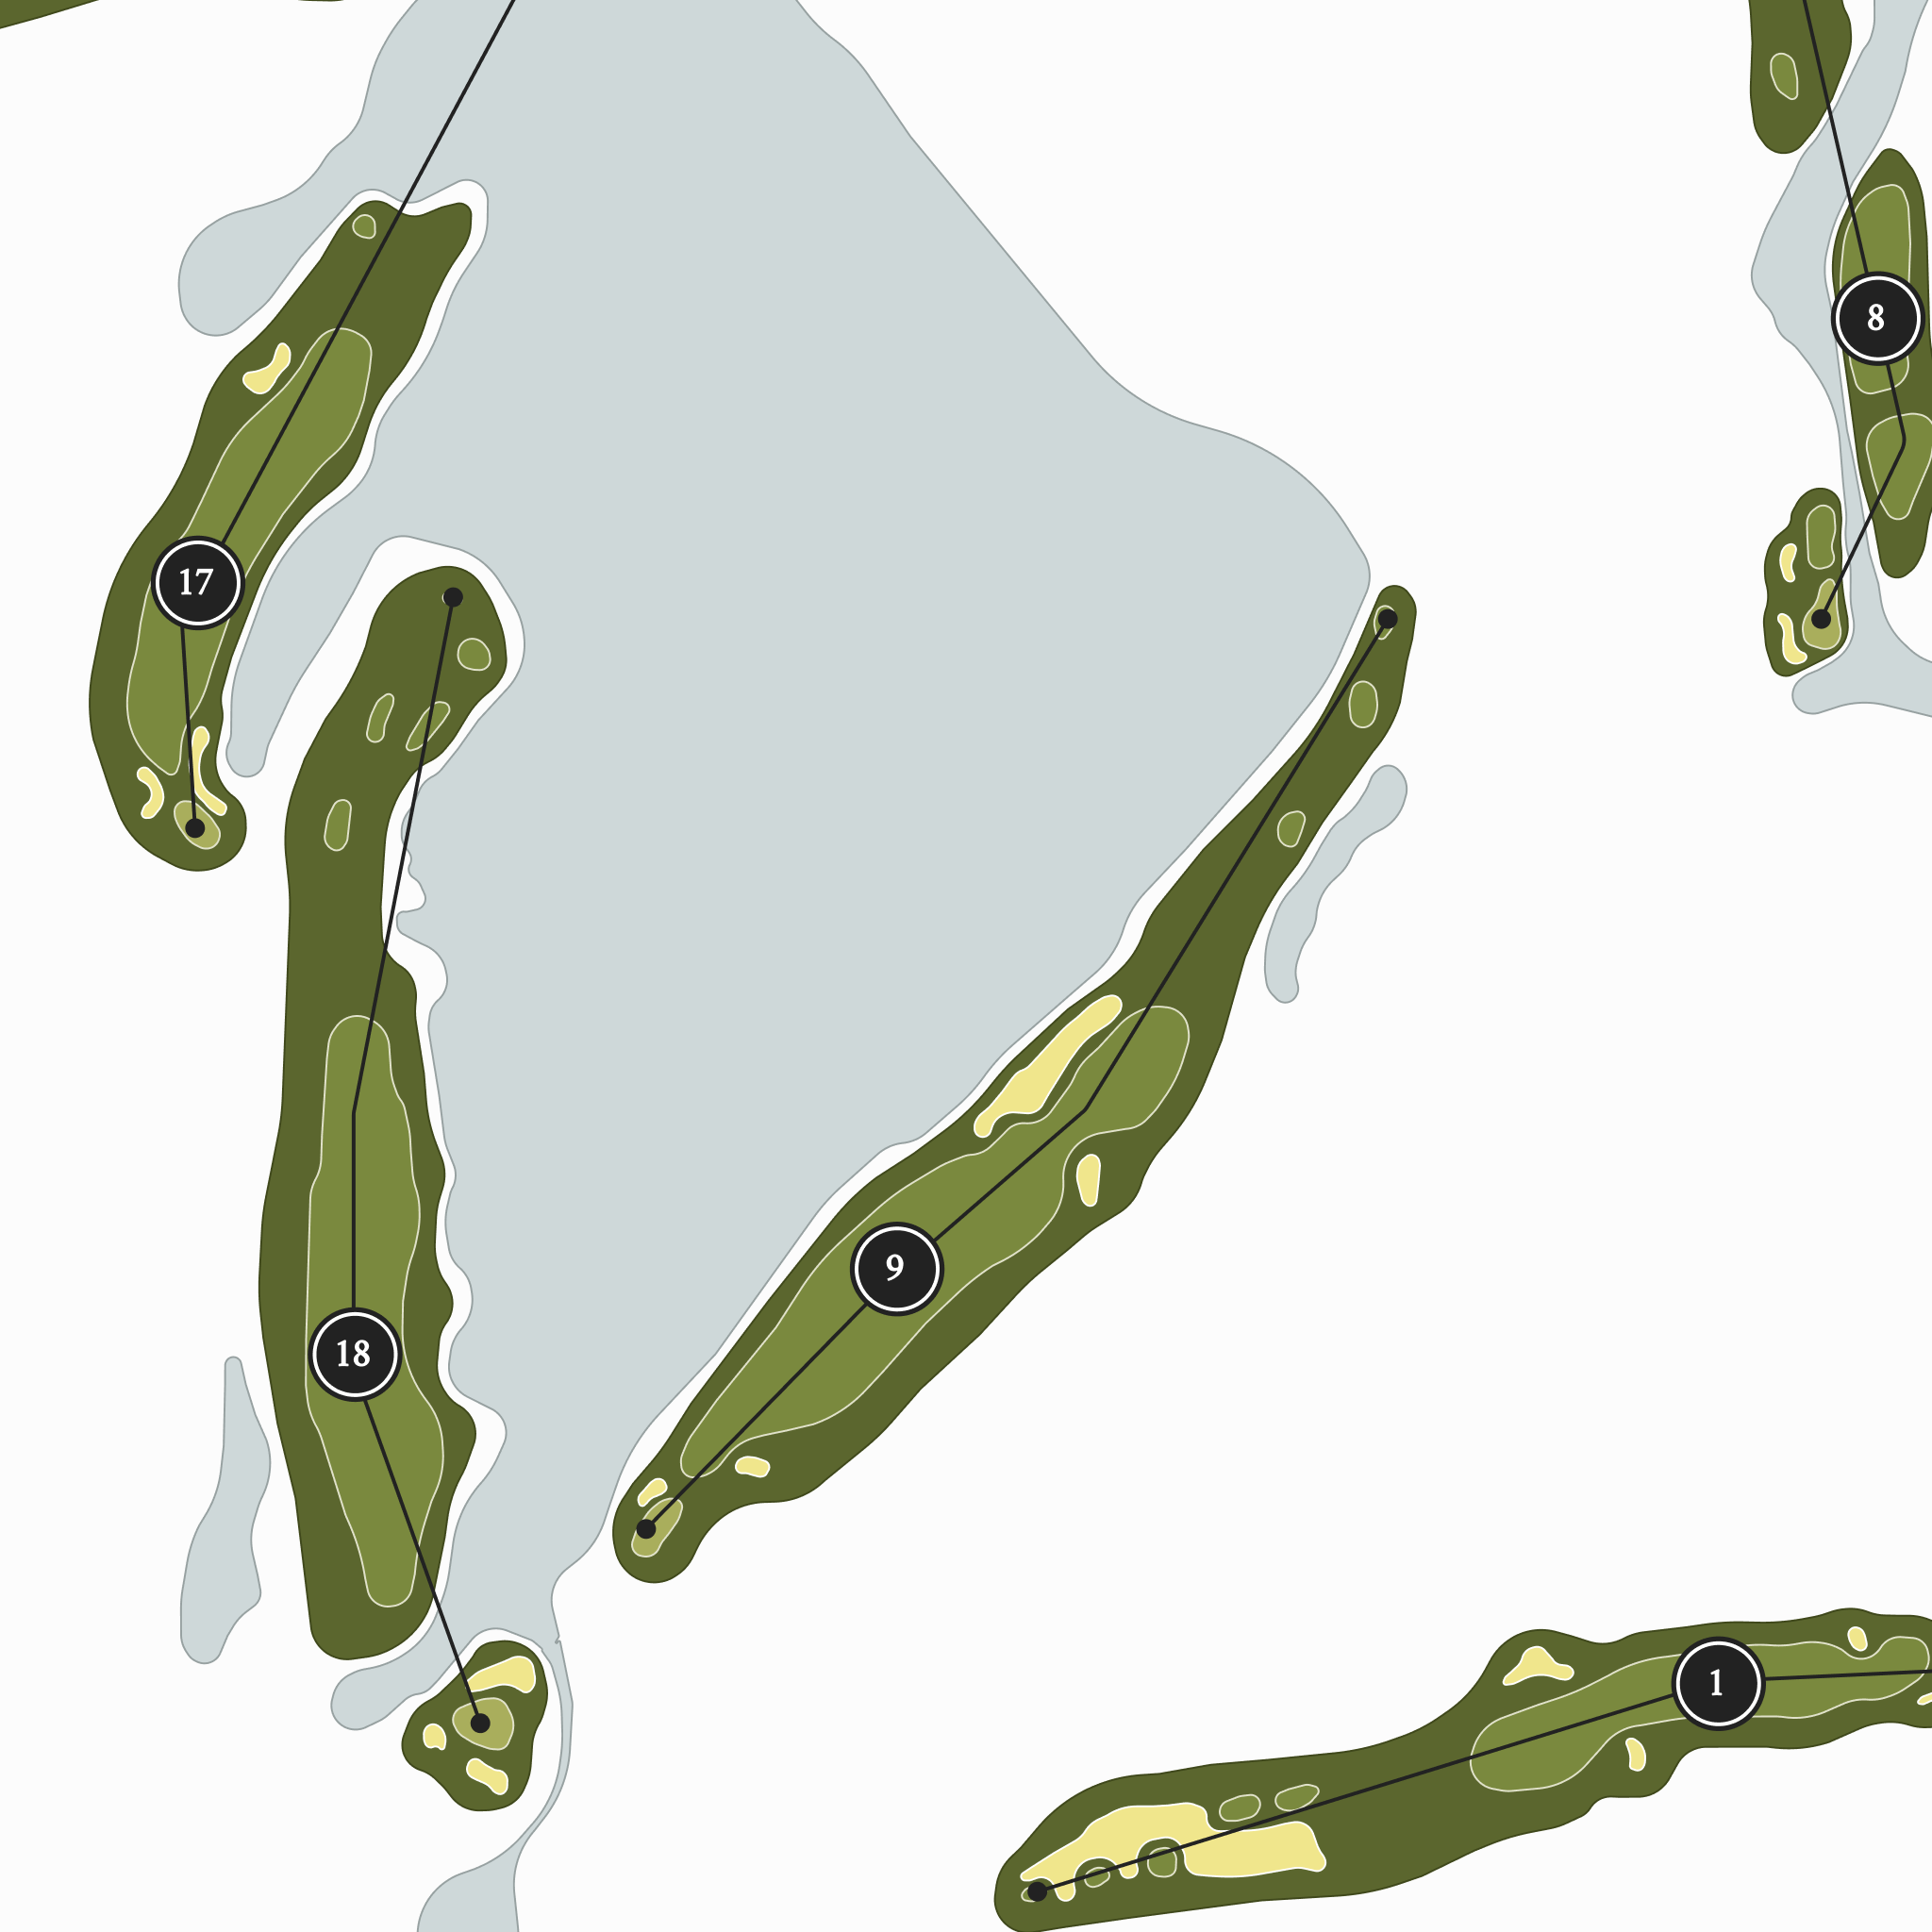 Omni Amelia Island Resort - Oak Marsh | Golf Course Map | Close Up